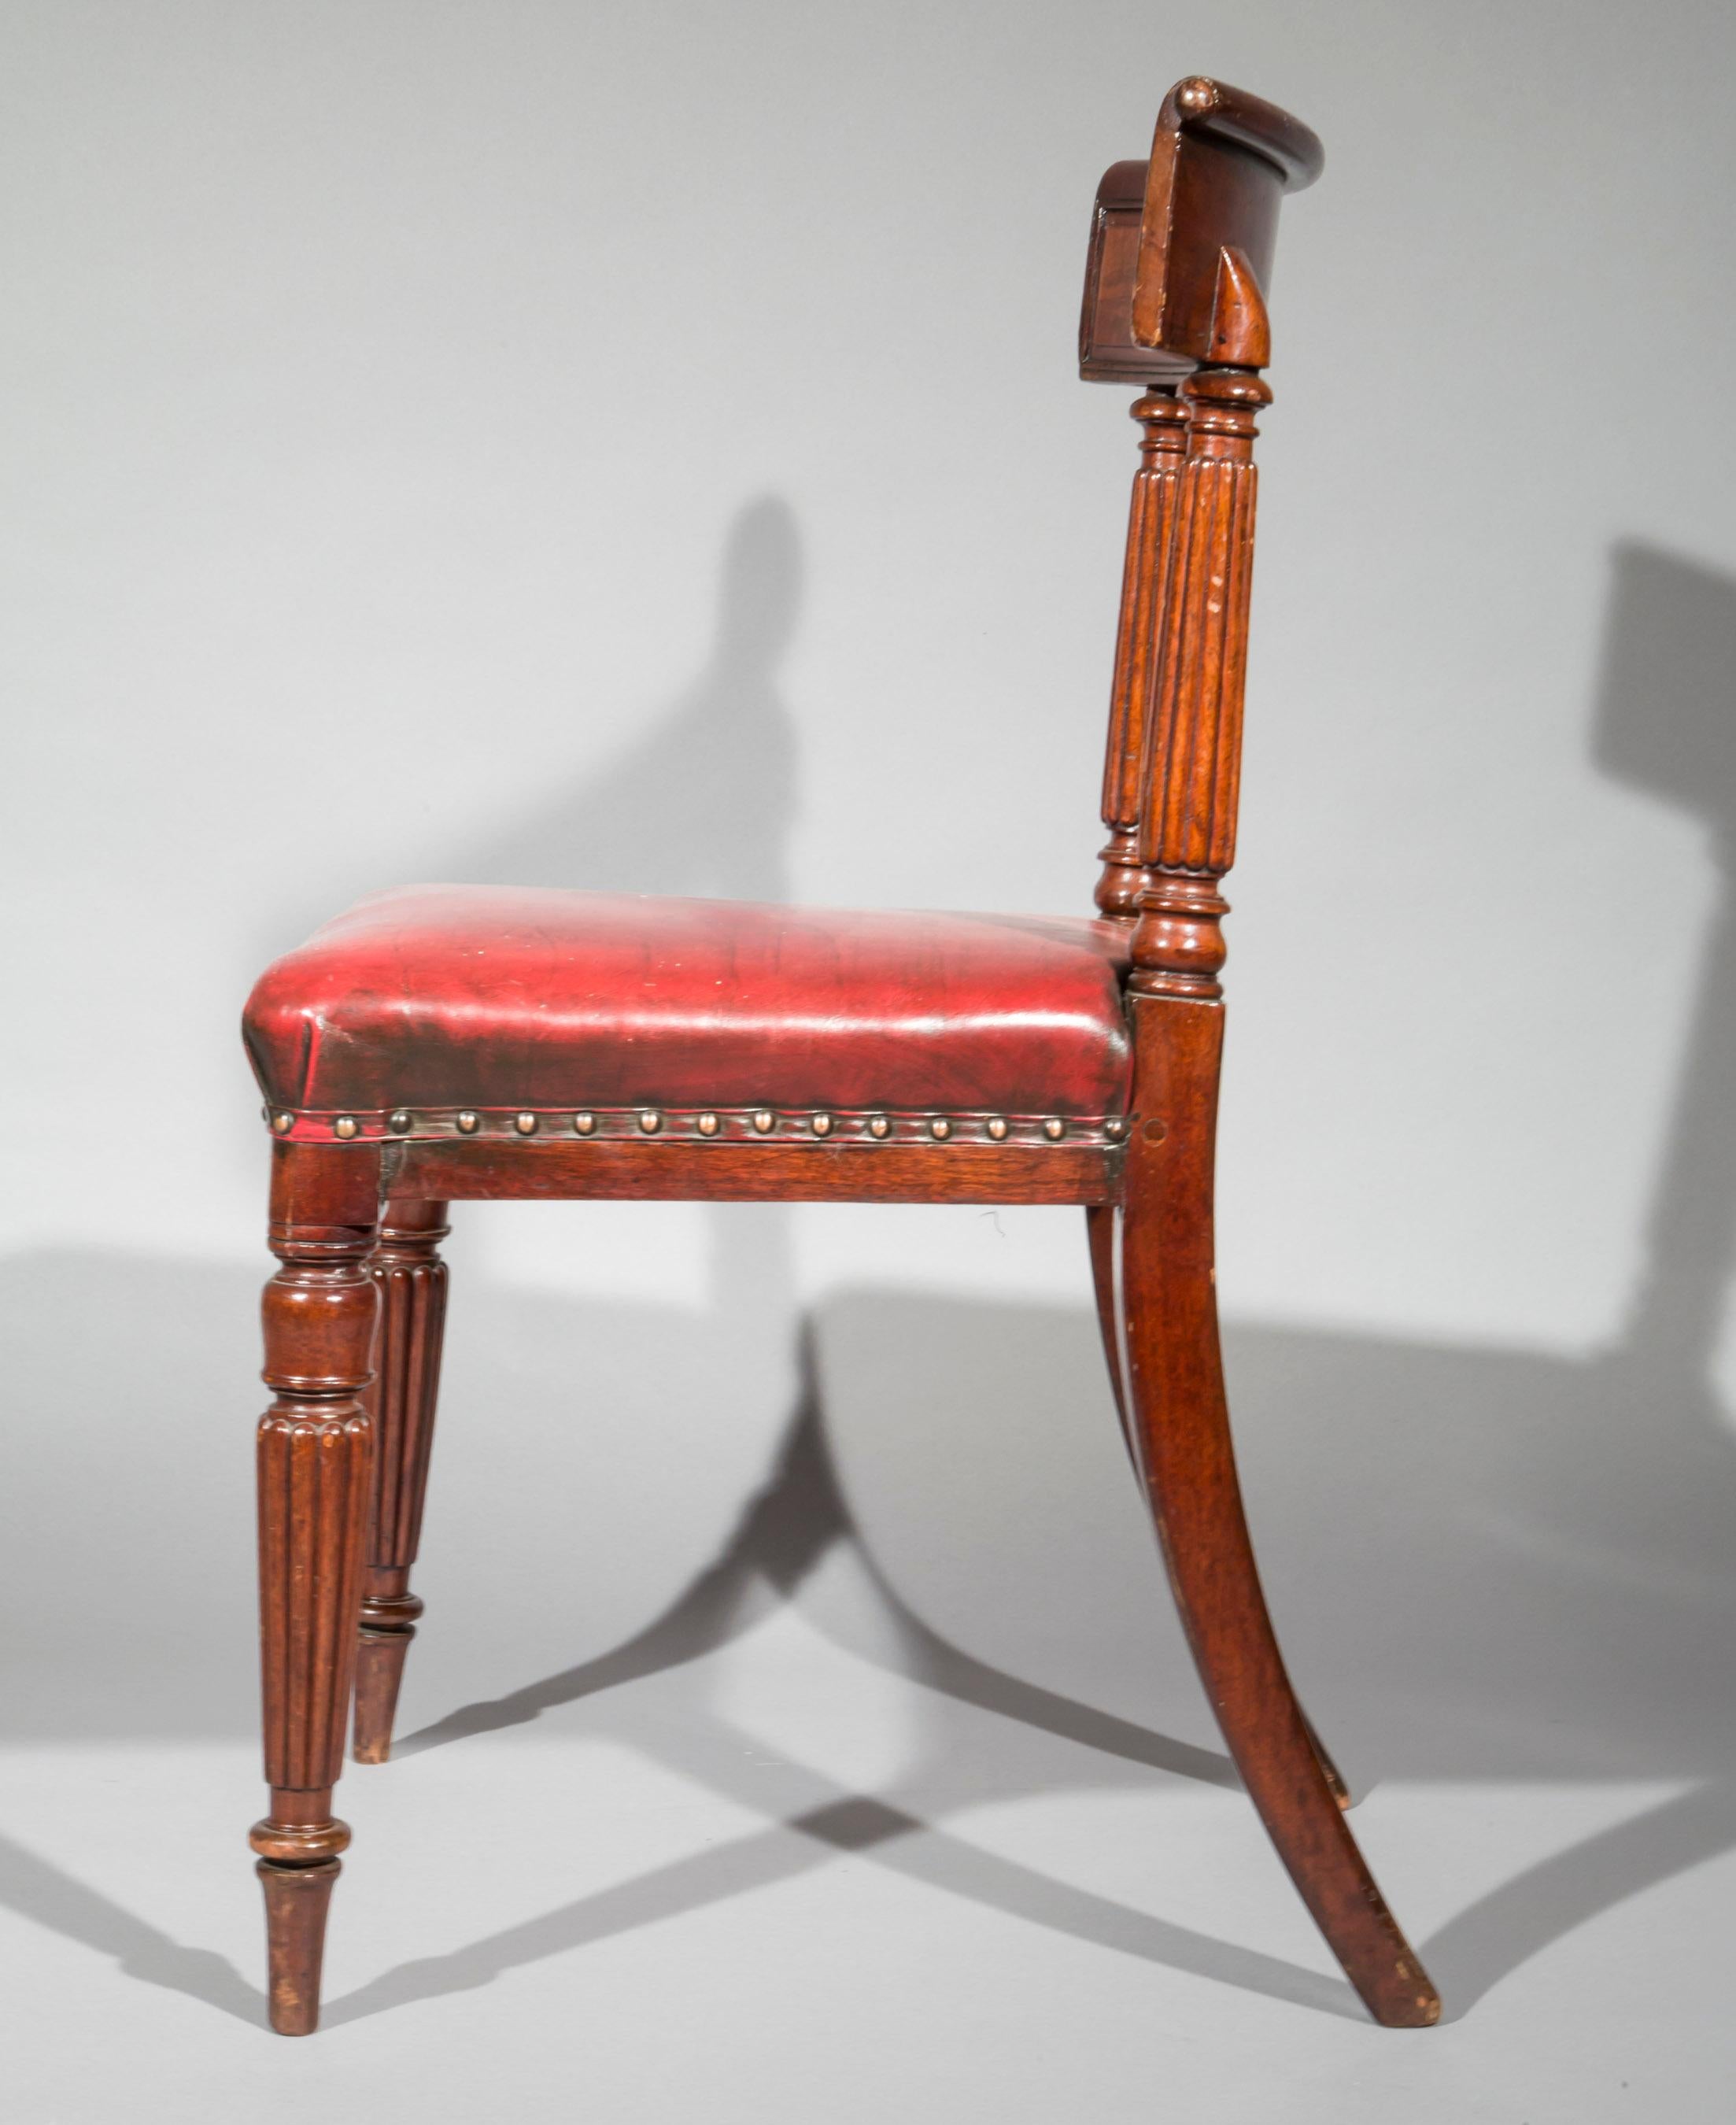 British Antique Regency Royal Desk Chair in Burgundy Leather